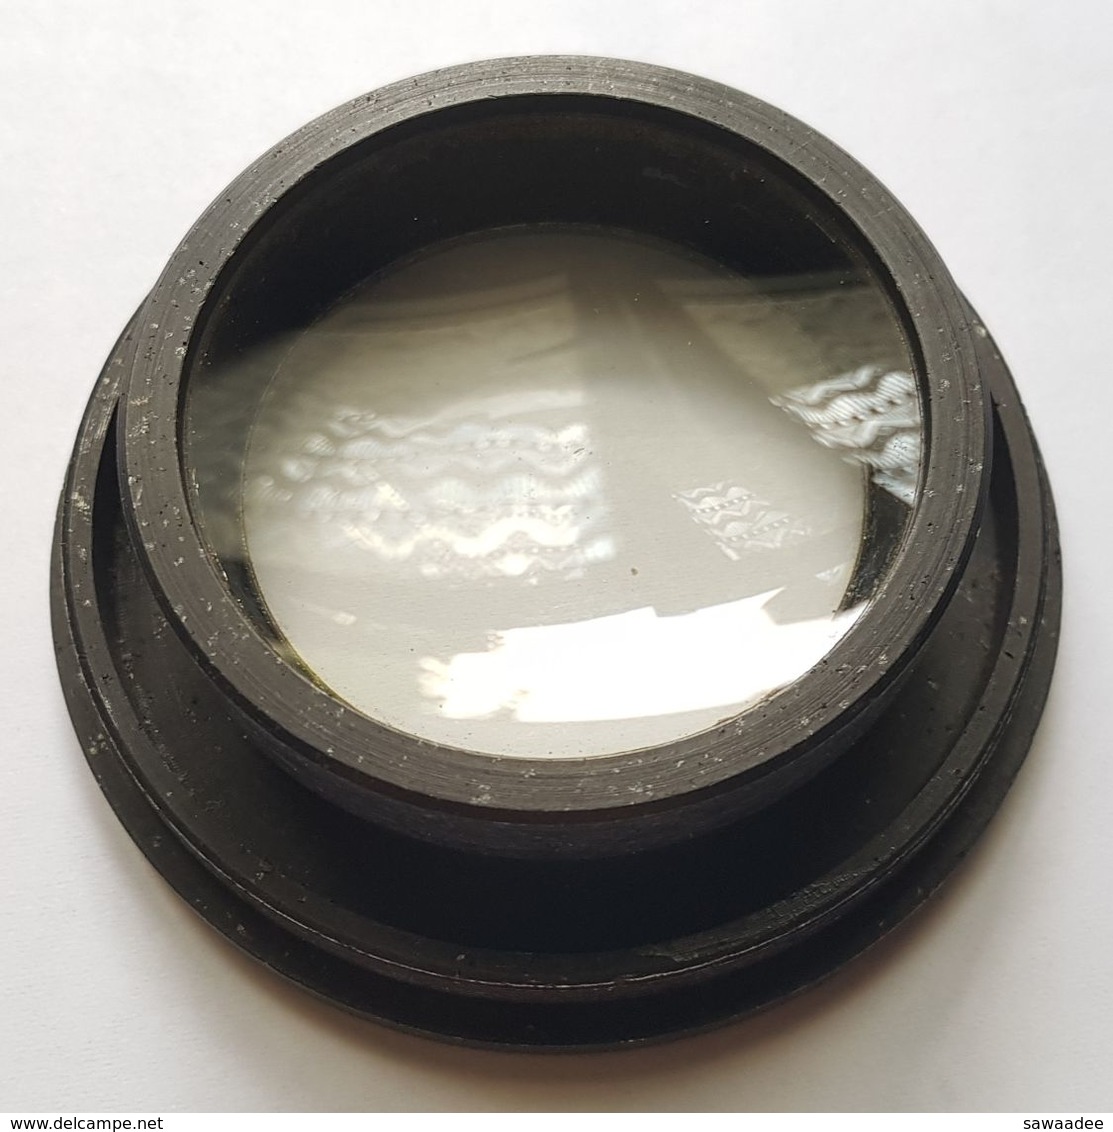 OPTIQUE - SOM BERTHIOT - PARIS - EURYGRAPHE - 1:12 - F = 610 Bté - Lenses